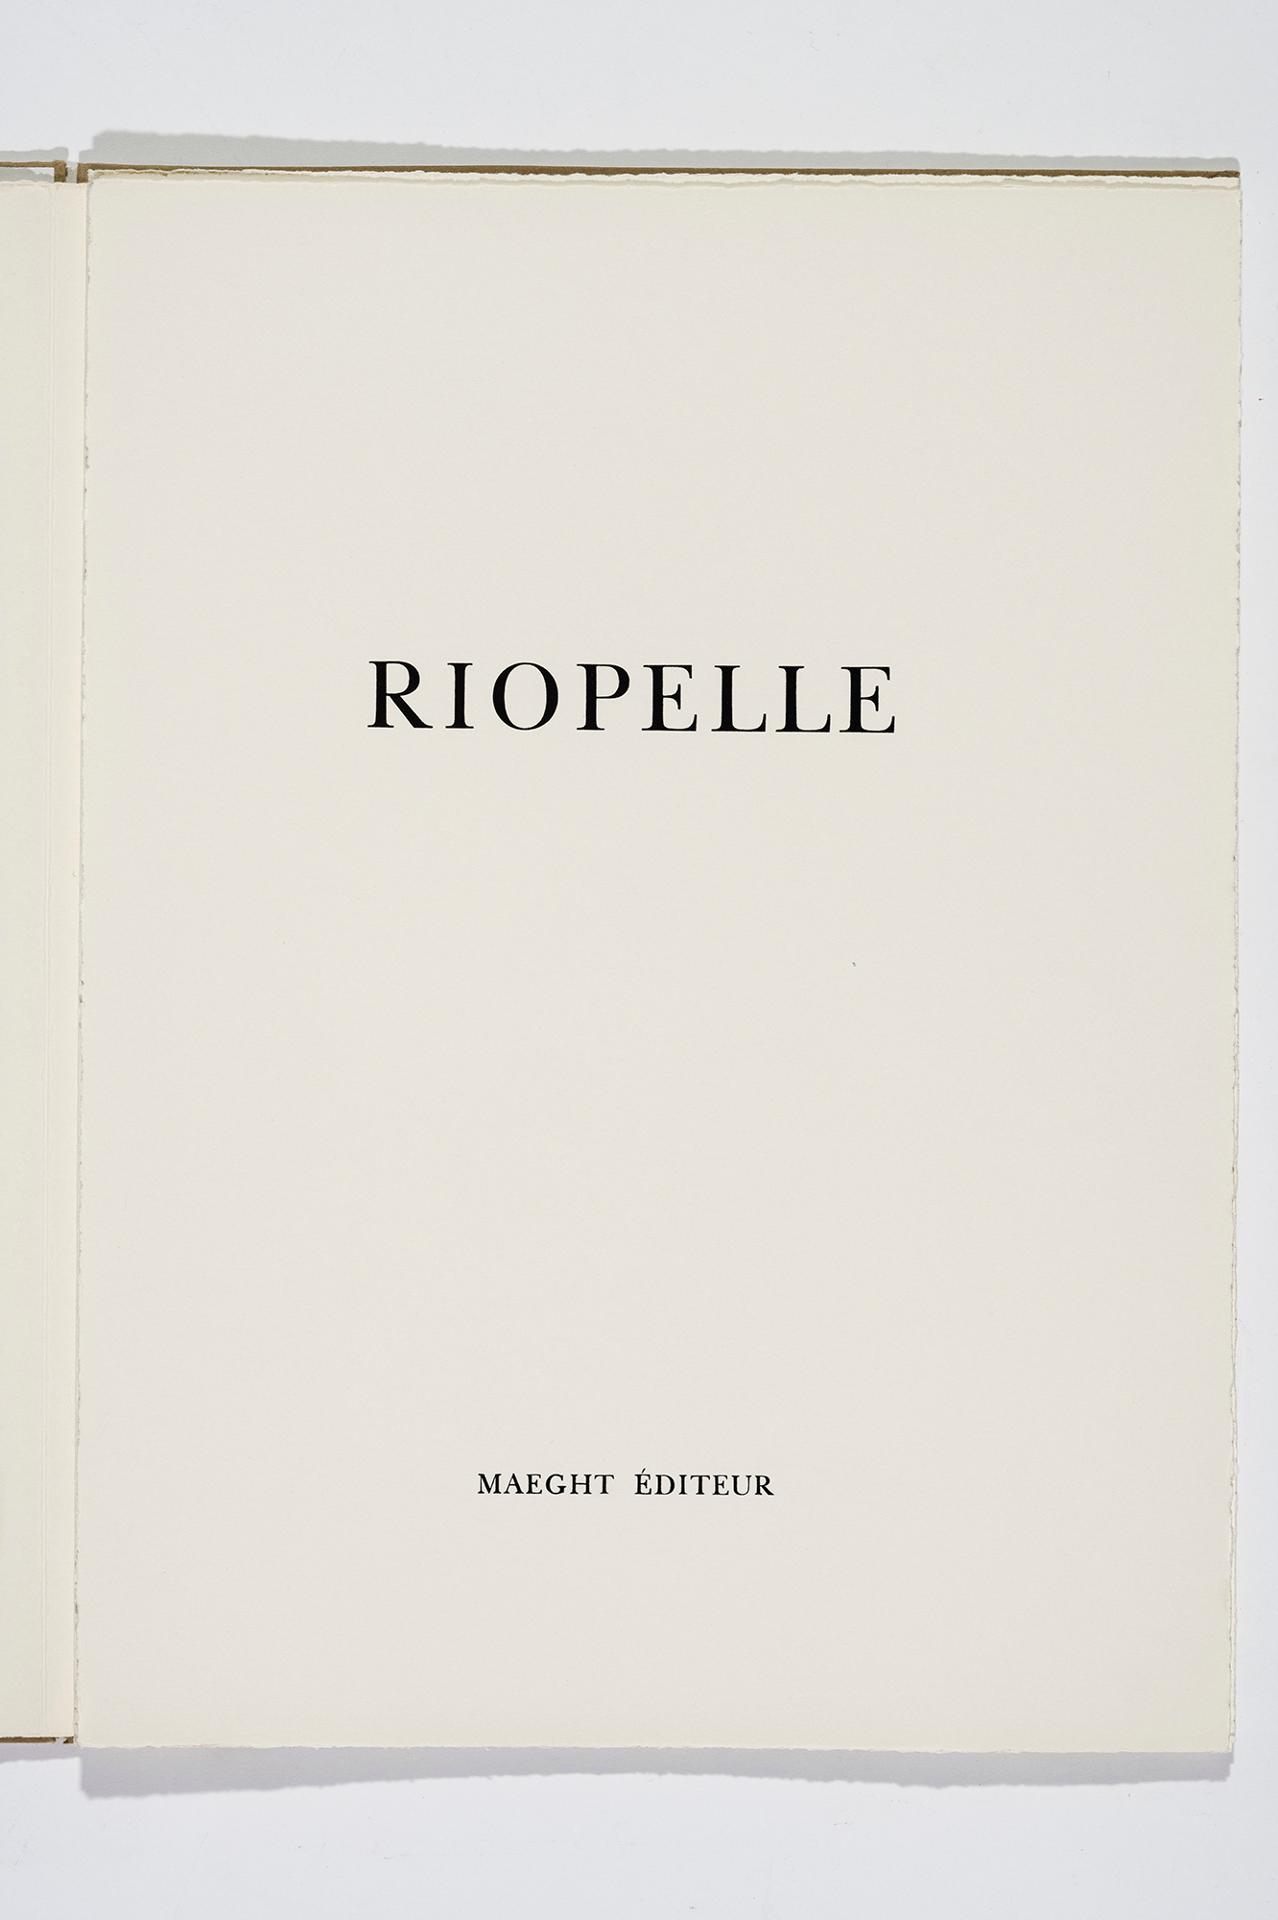 Franco Russoli [Jean Paul Riopelle] - Riopelle (nº 185) (FR), 1970